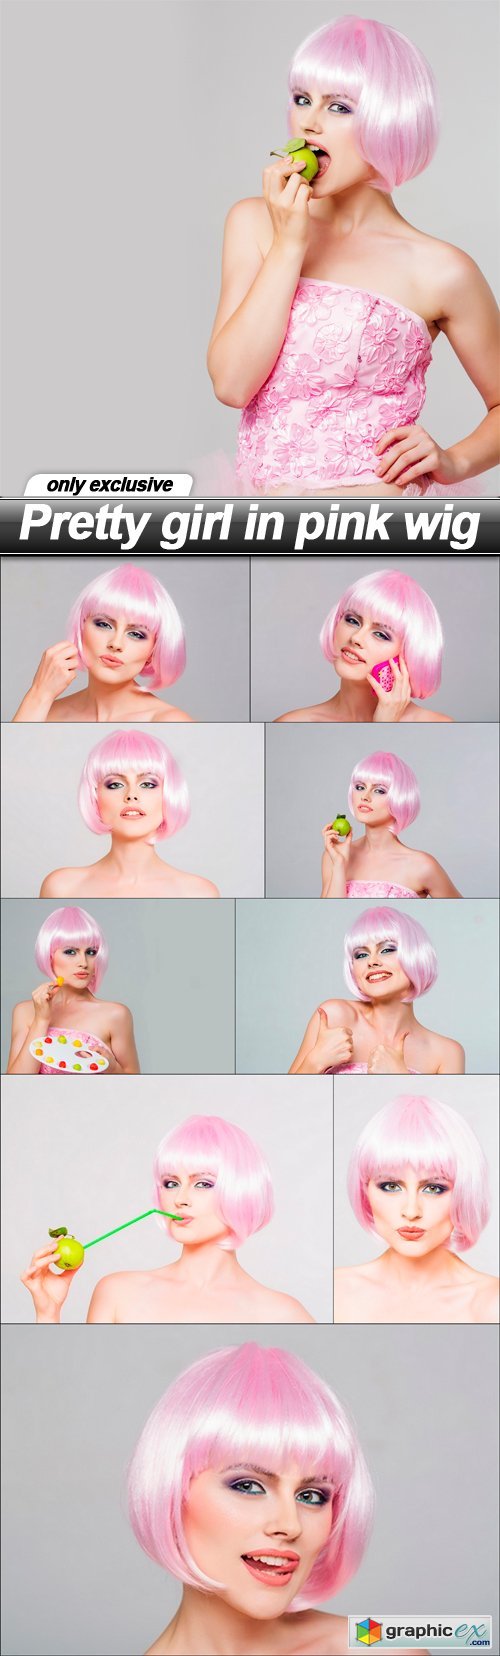 Pretty girl in pink wig - 10 UHQ JPEG